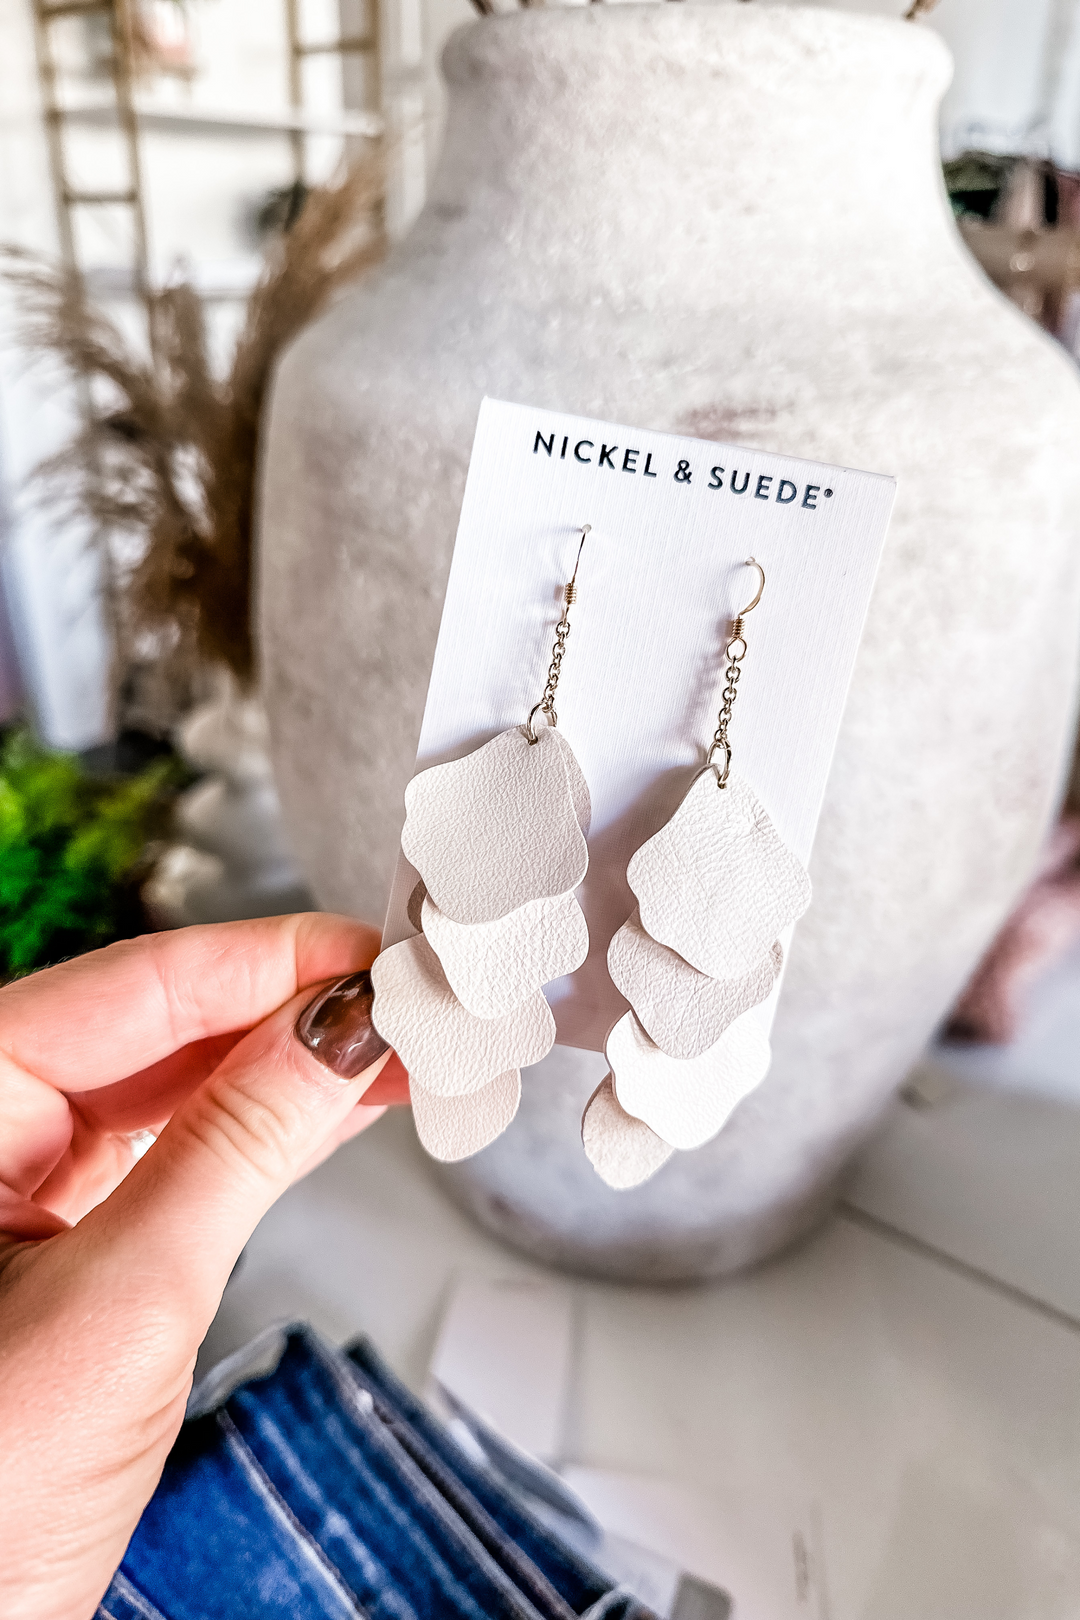 The Cream Nappa Florence Earrings [Nickel & Suede]